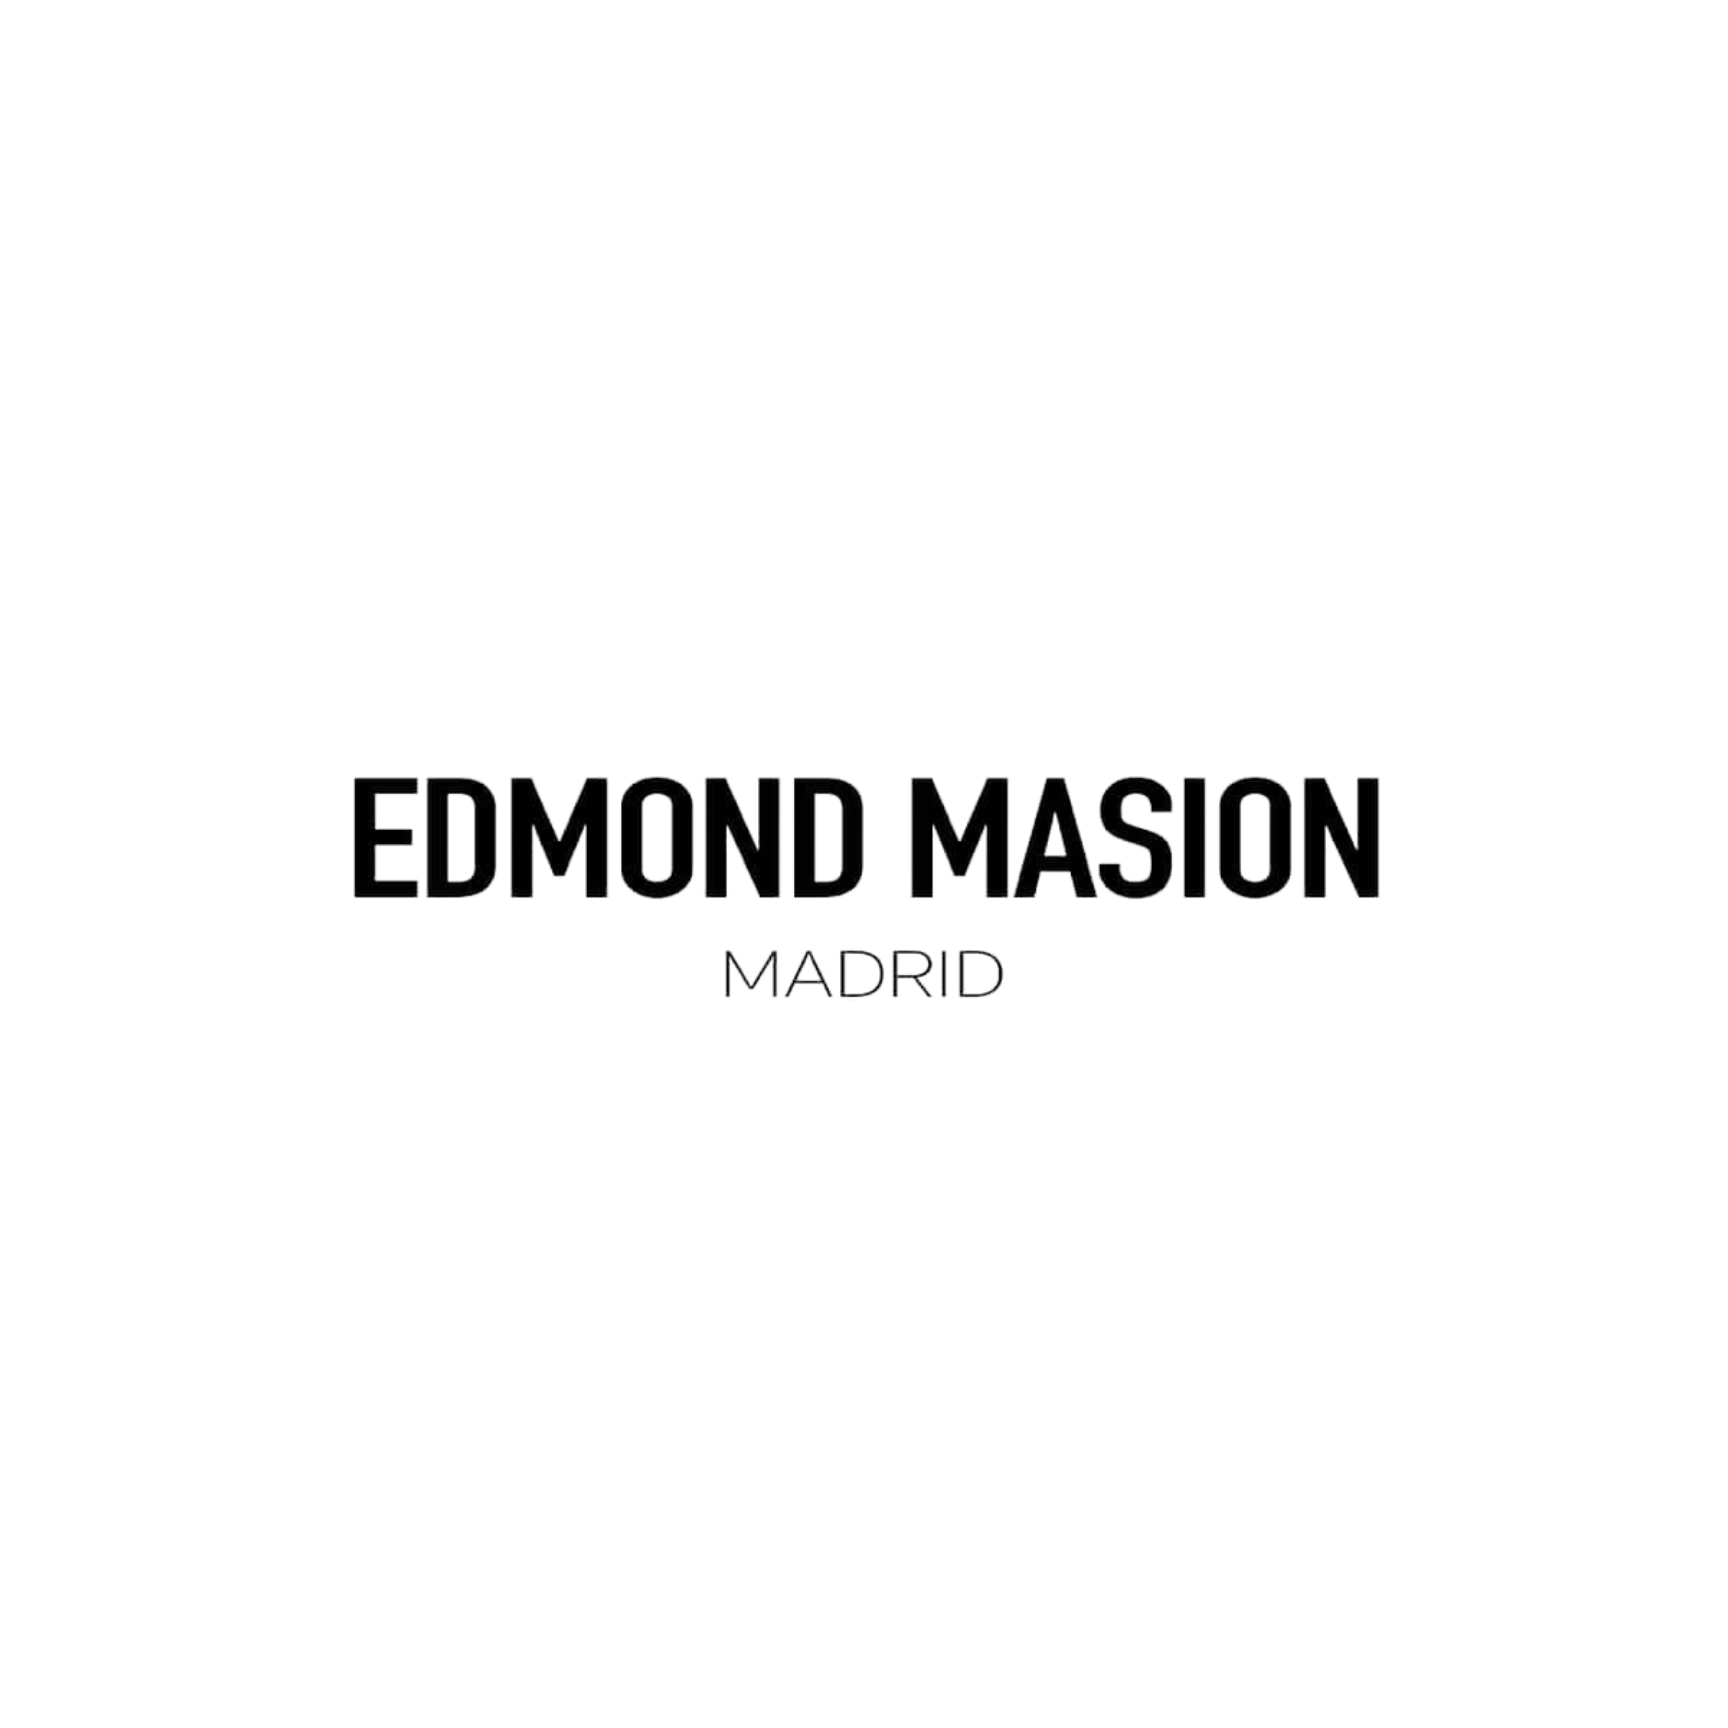 EDMOND MASION